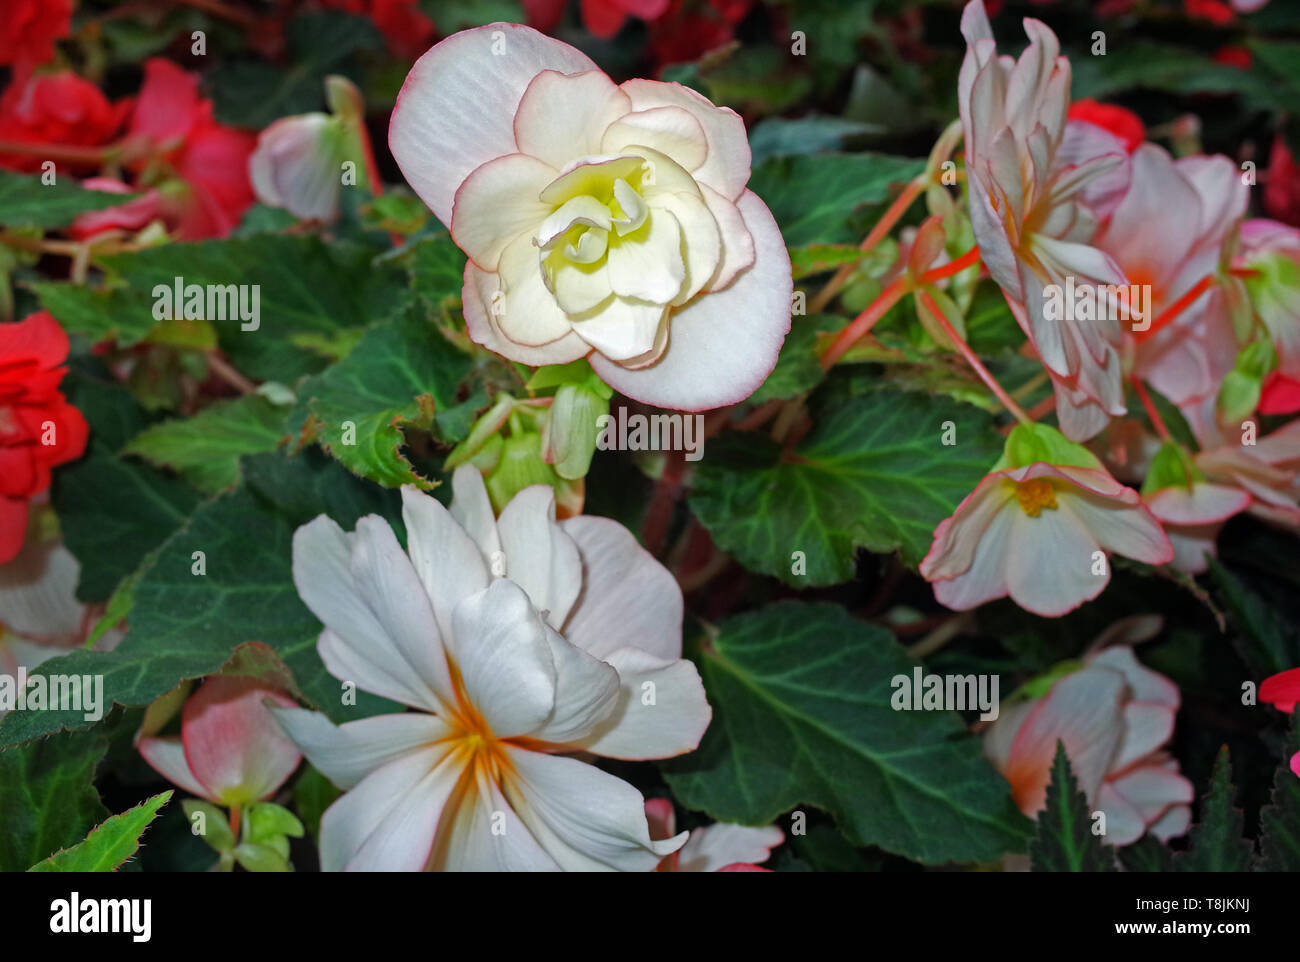 Begonia close-up Stock Photo